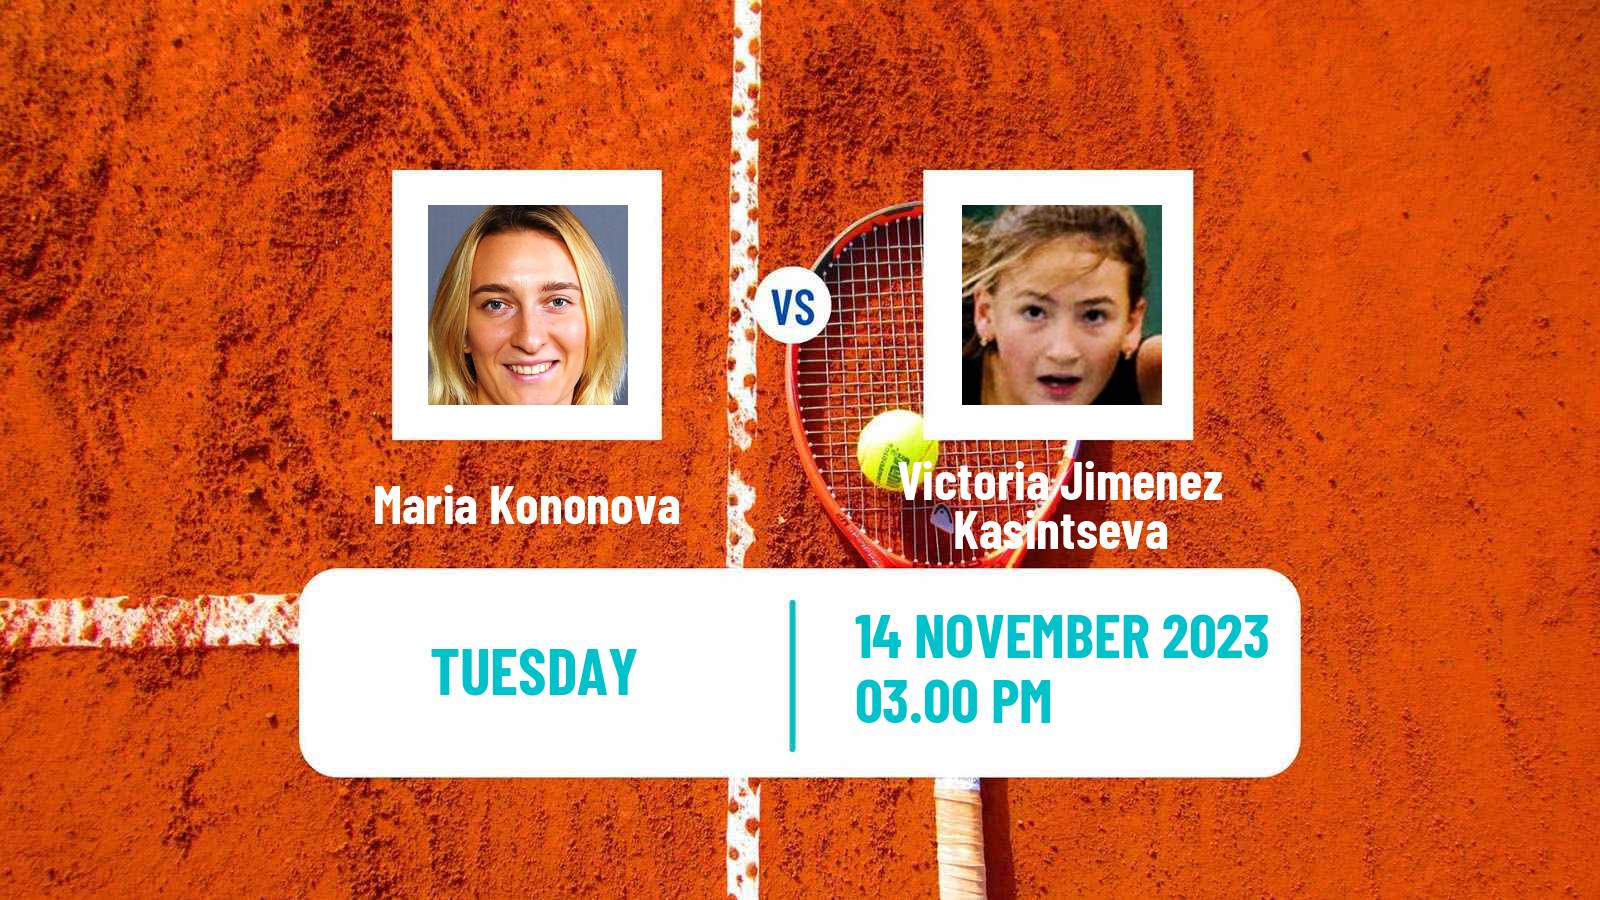 Tennis ITF W25 Austin Tx Women Maria Kononova - Victoria Jimenez Kasintseva